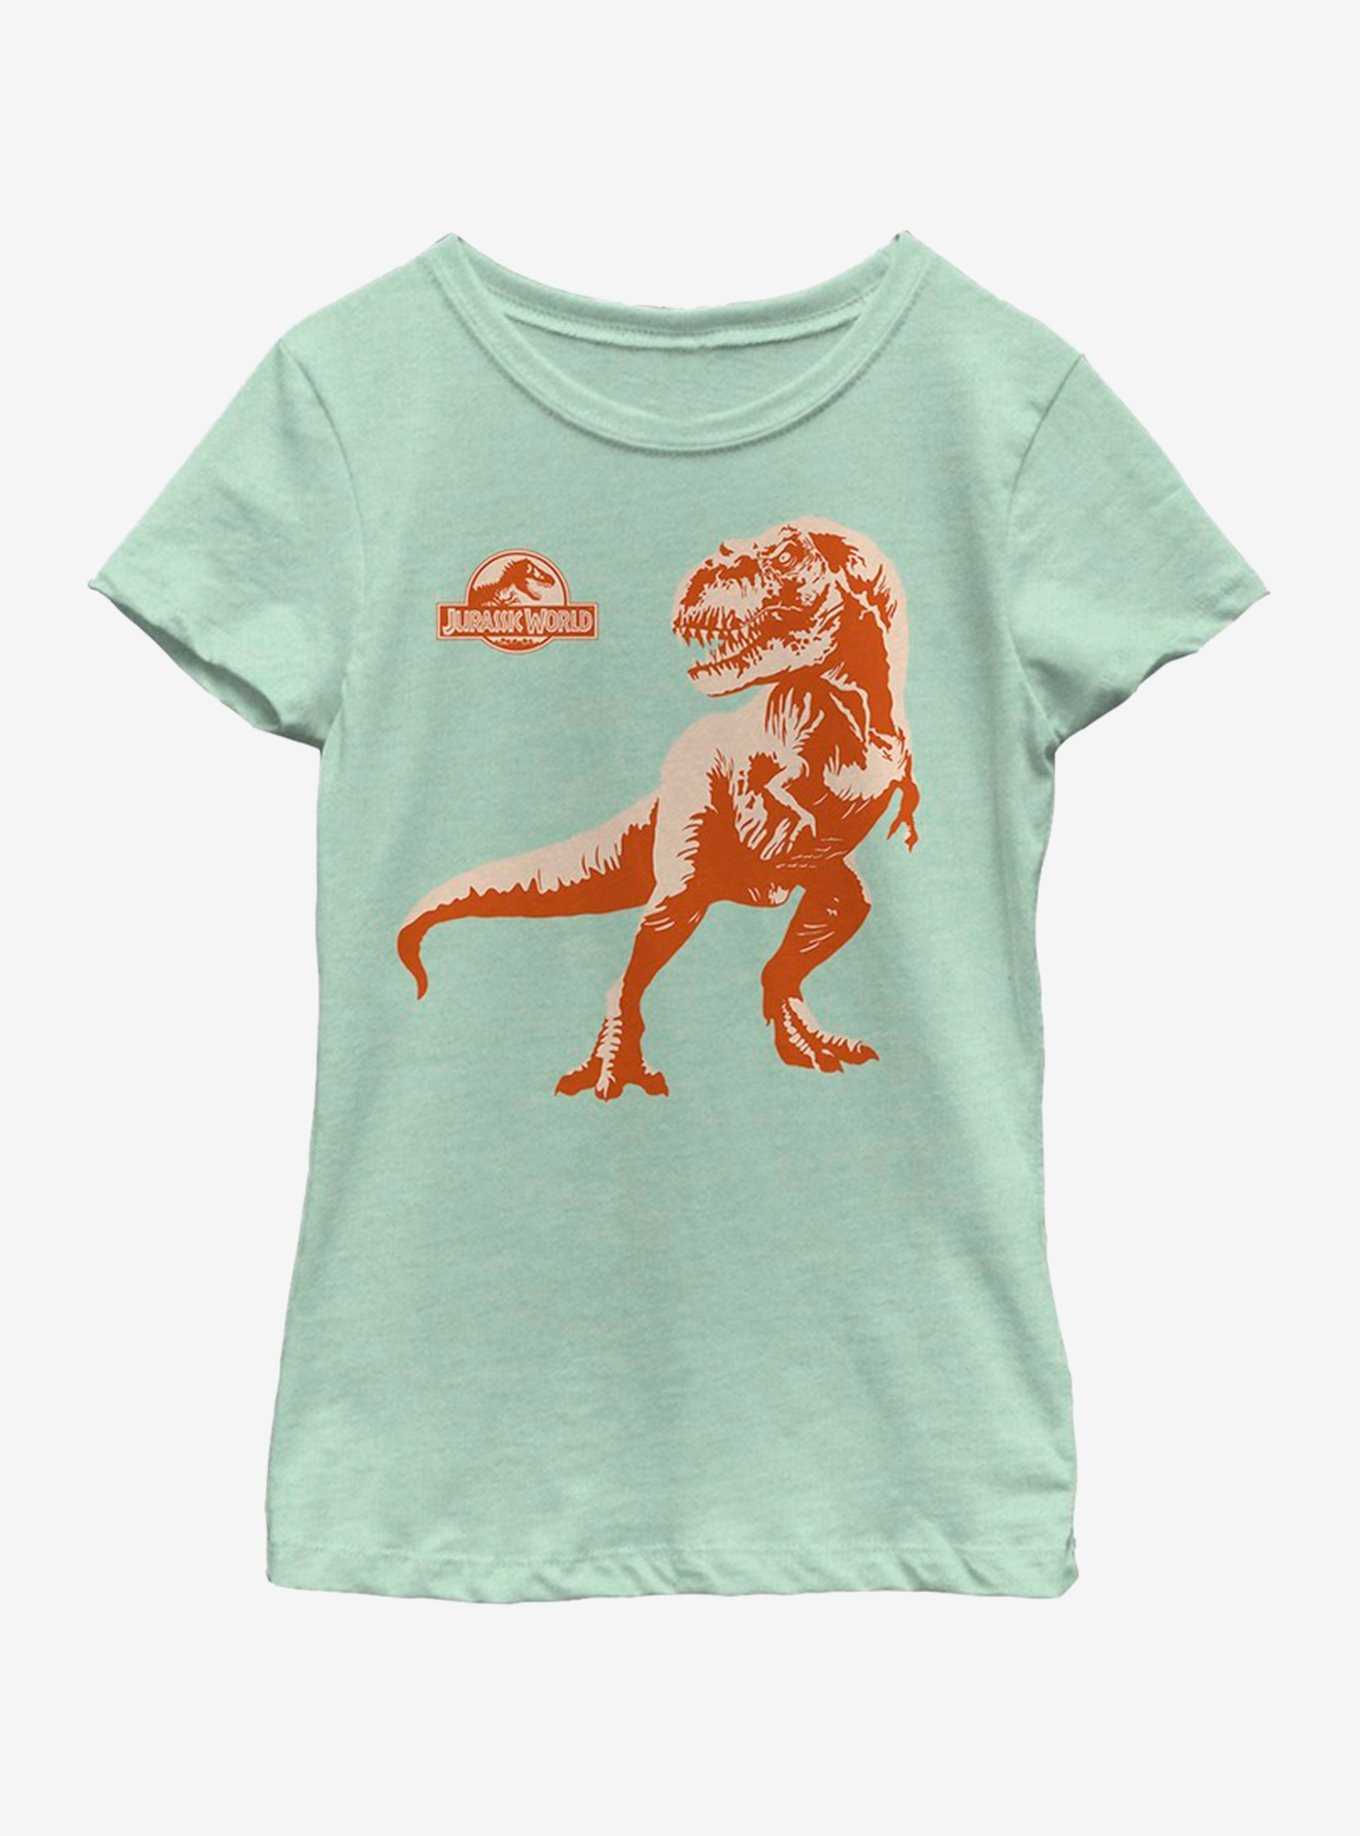 Jurassic Park Action Dino Youth Girls T-Shirt, , hi-res